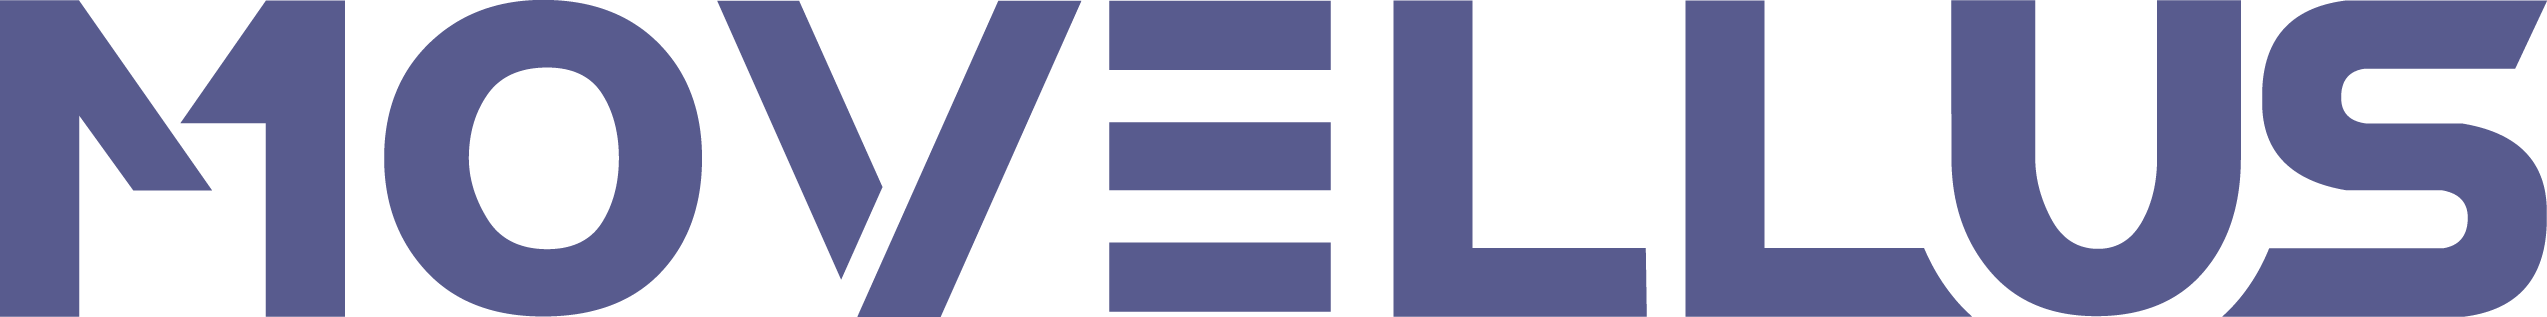 Movellus Logo lt purple2500.png